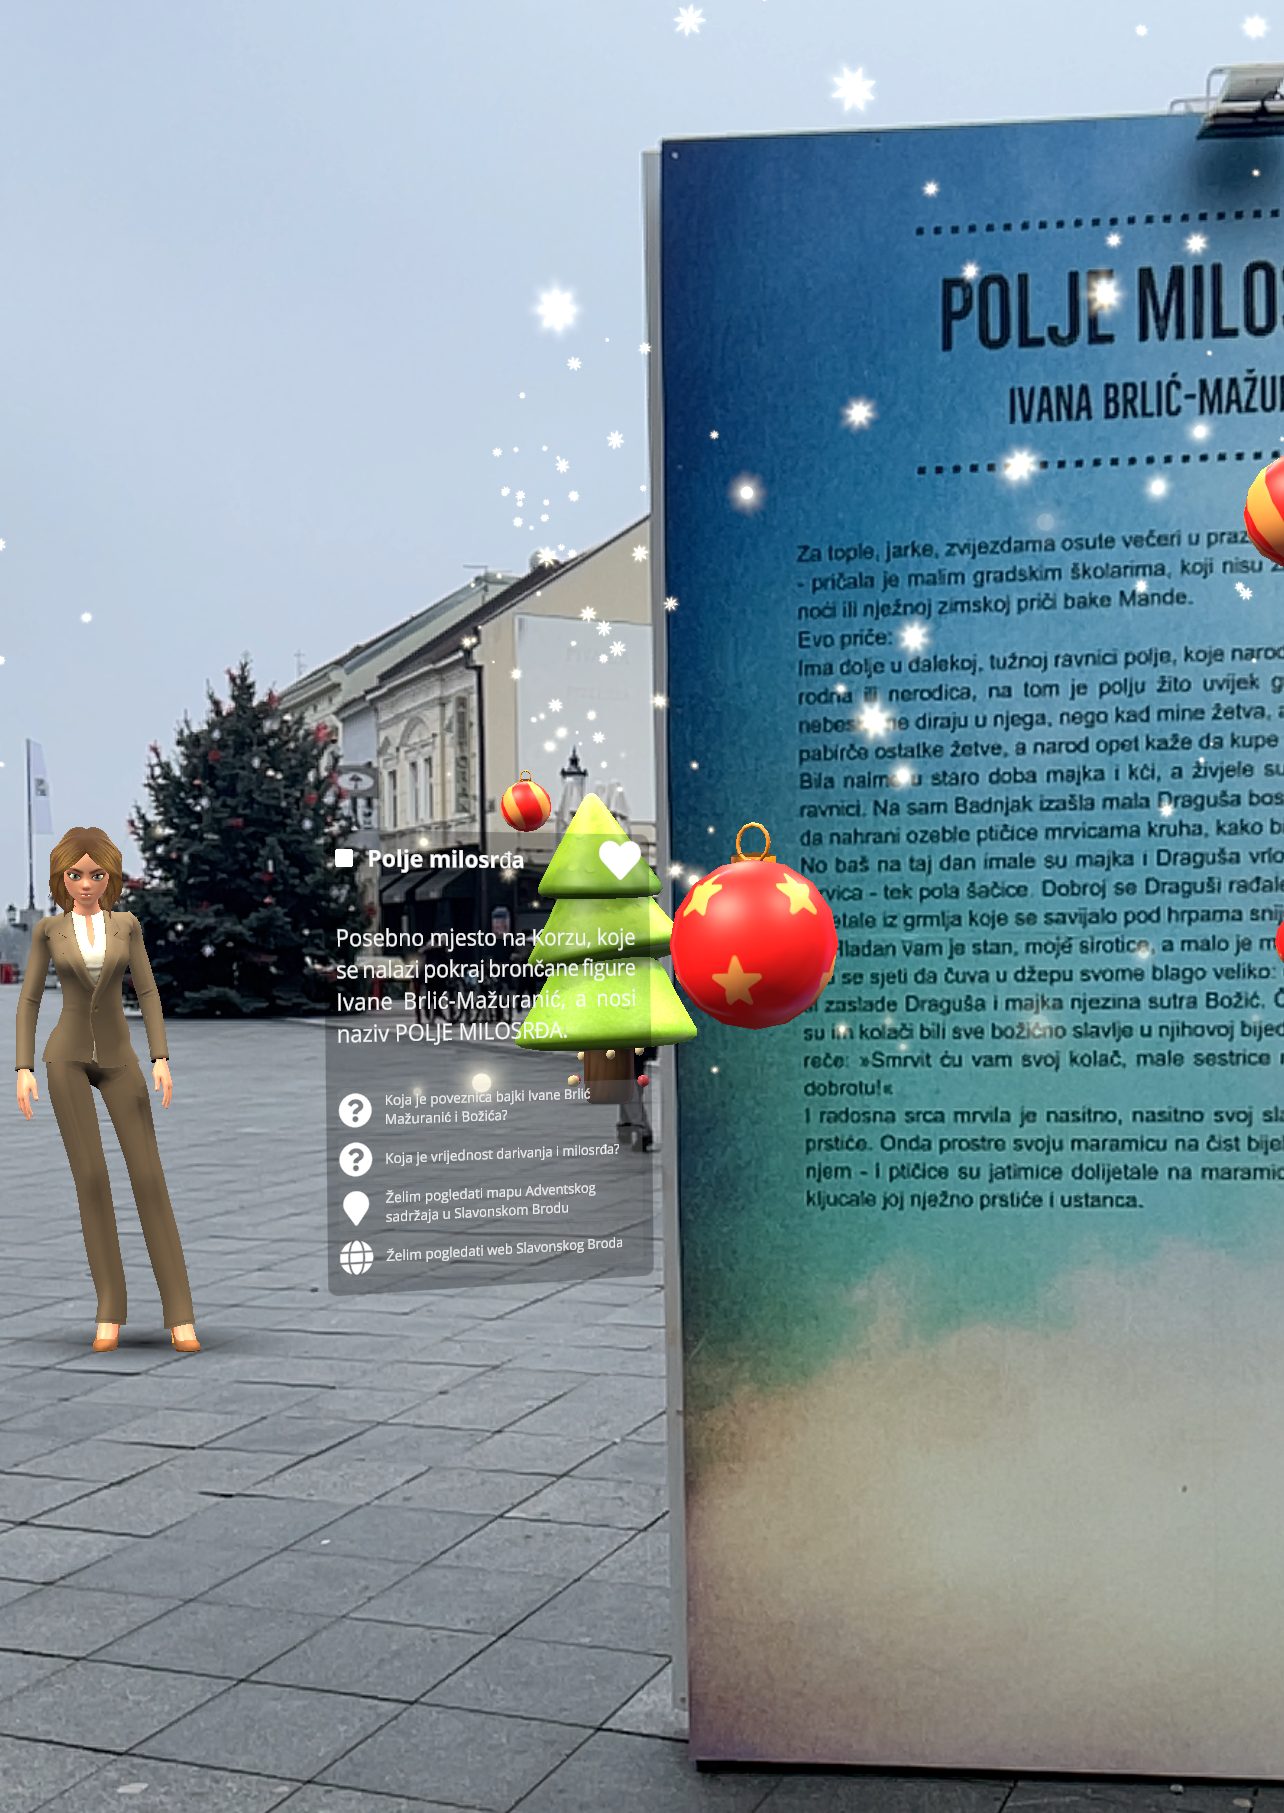 Doživite Advent iz davnina u Slavonskom Brodu putem virtualne proširene stvarnosti